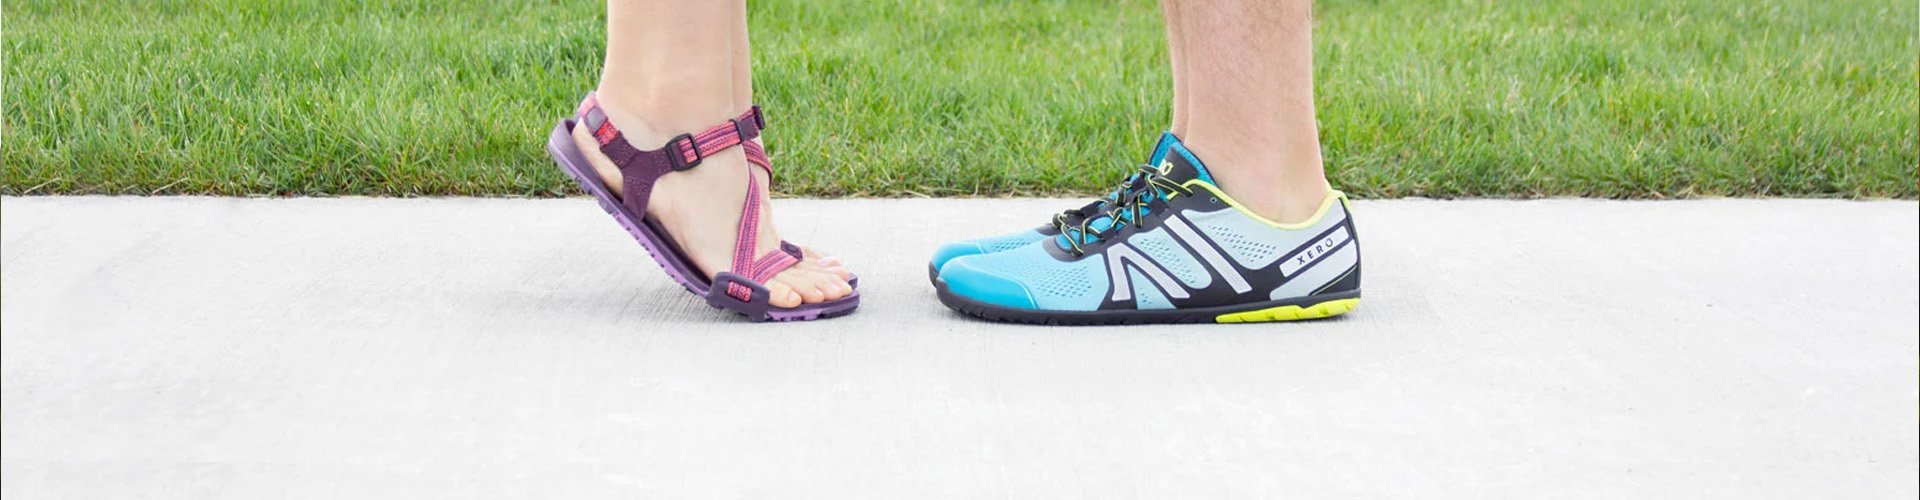 2 people standing on sidewalk with Xero shoes on 